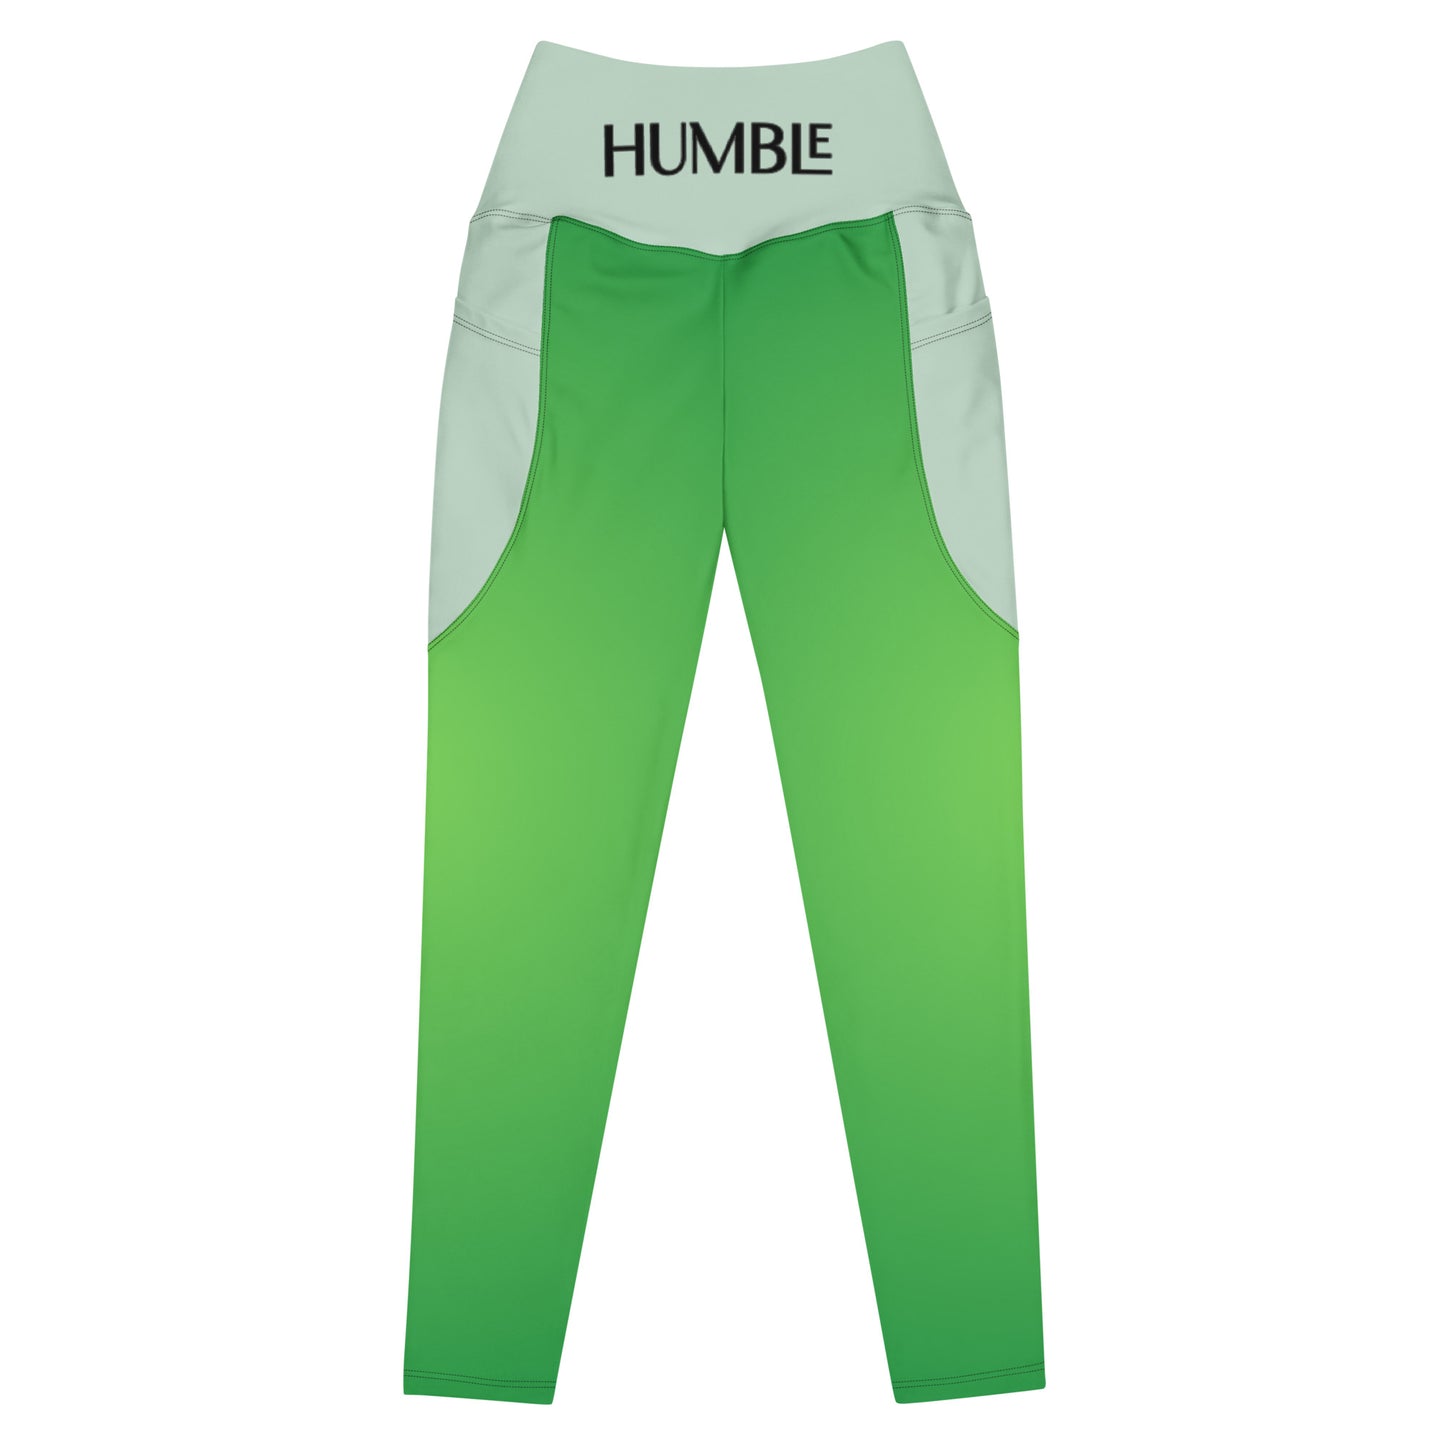 Humble Sportswear Color Match activewear, women’s leggings, Humble Sportswear leggings, women’s capri leggings